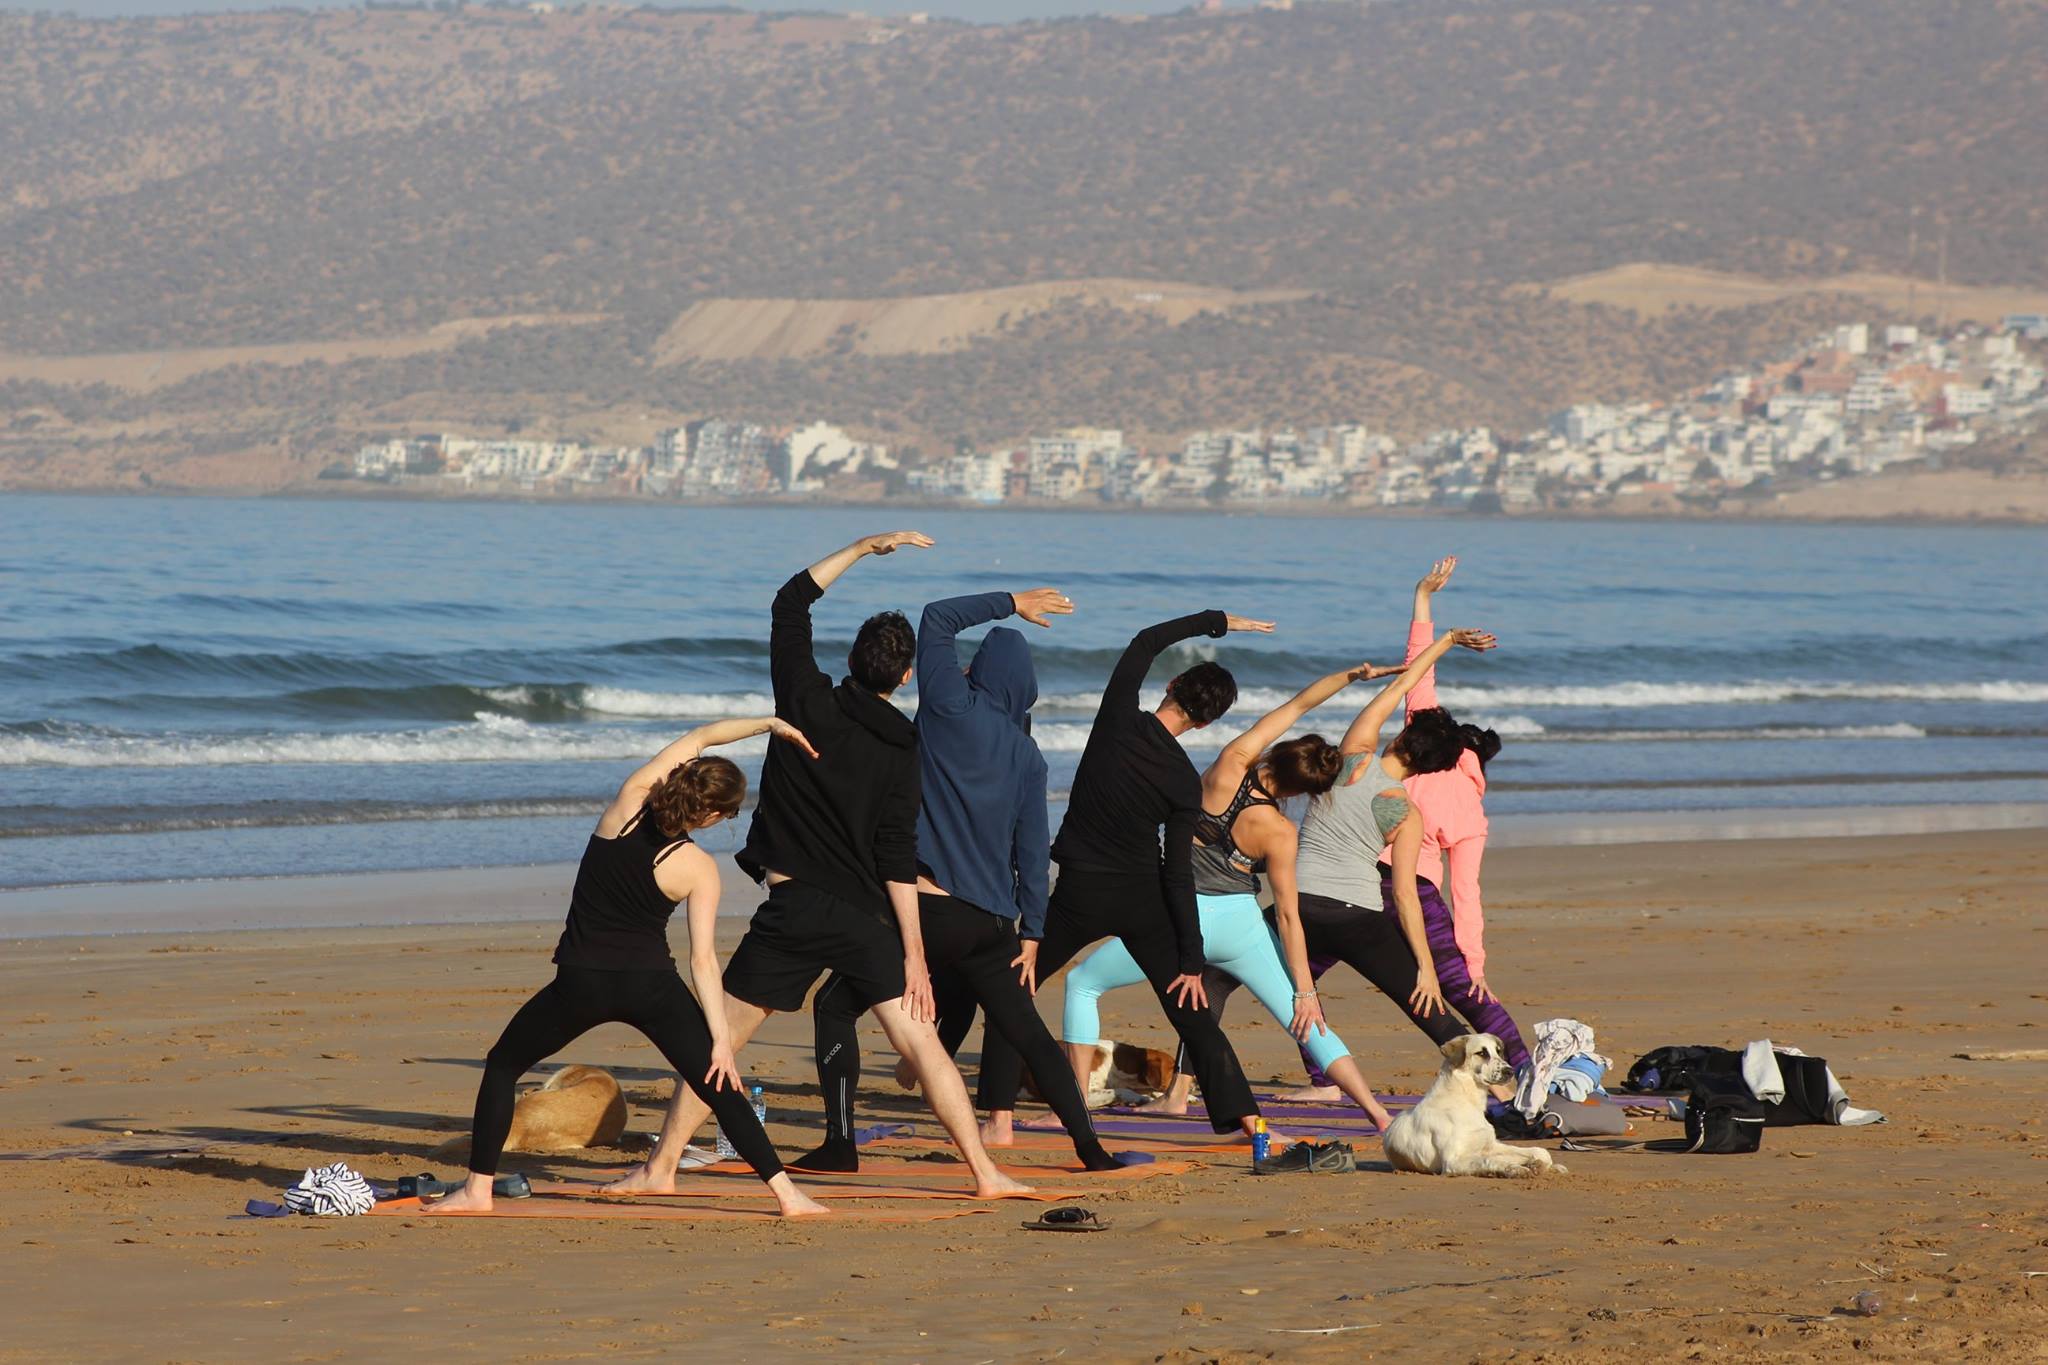 easy surf yoga maroc (7)1517390697.jpg